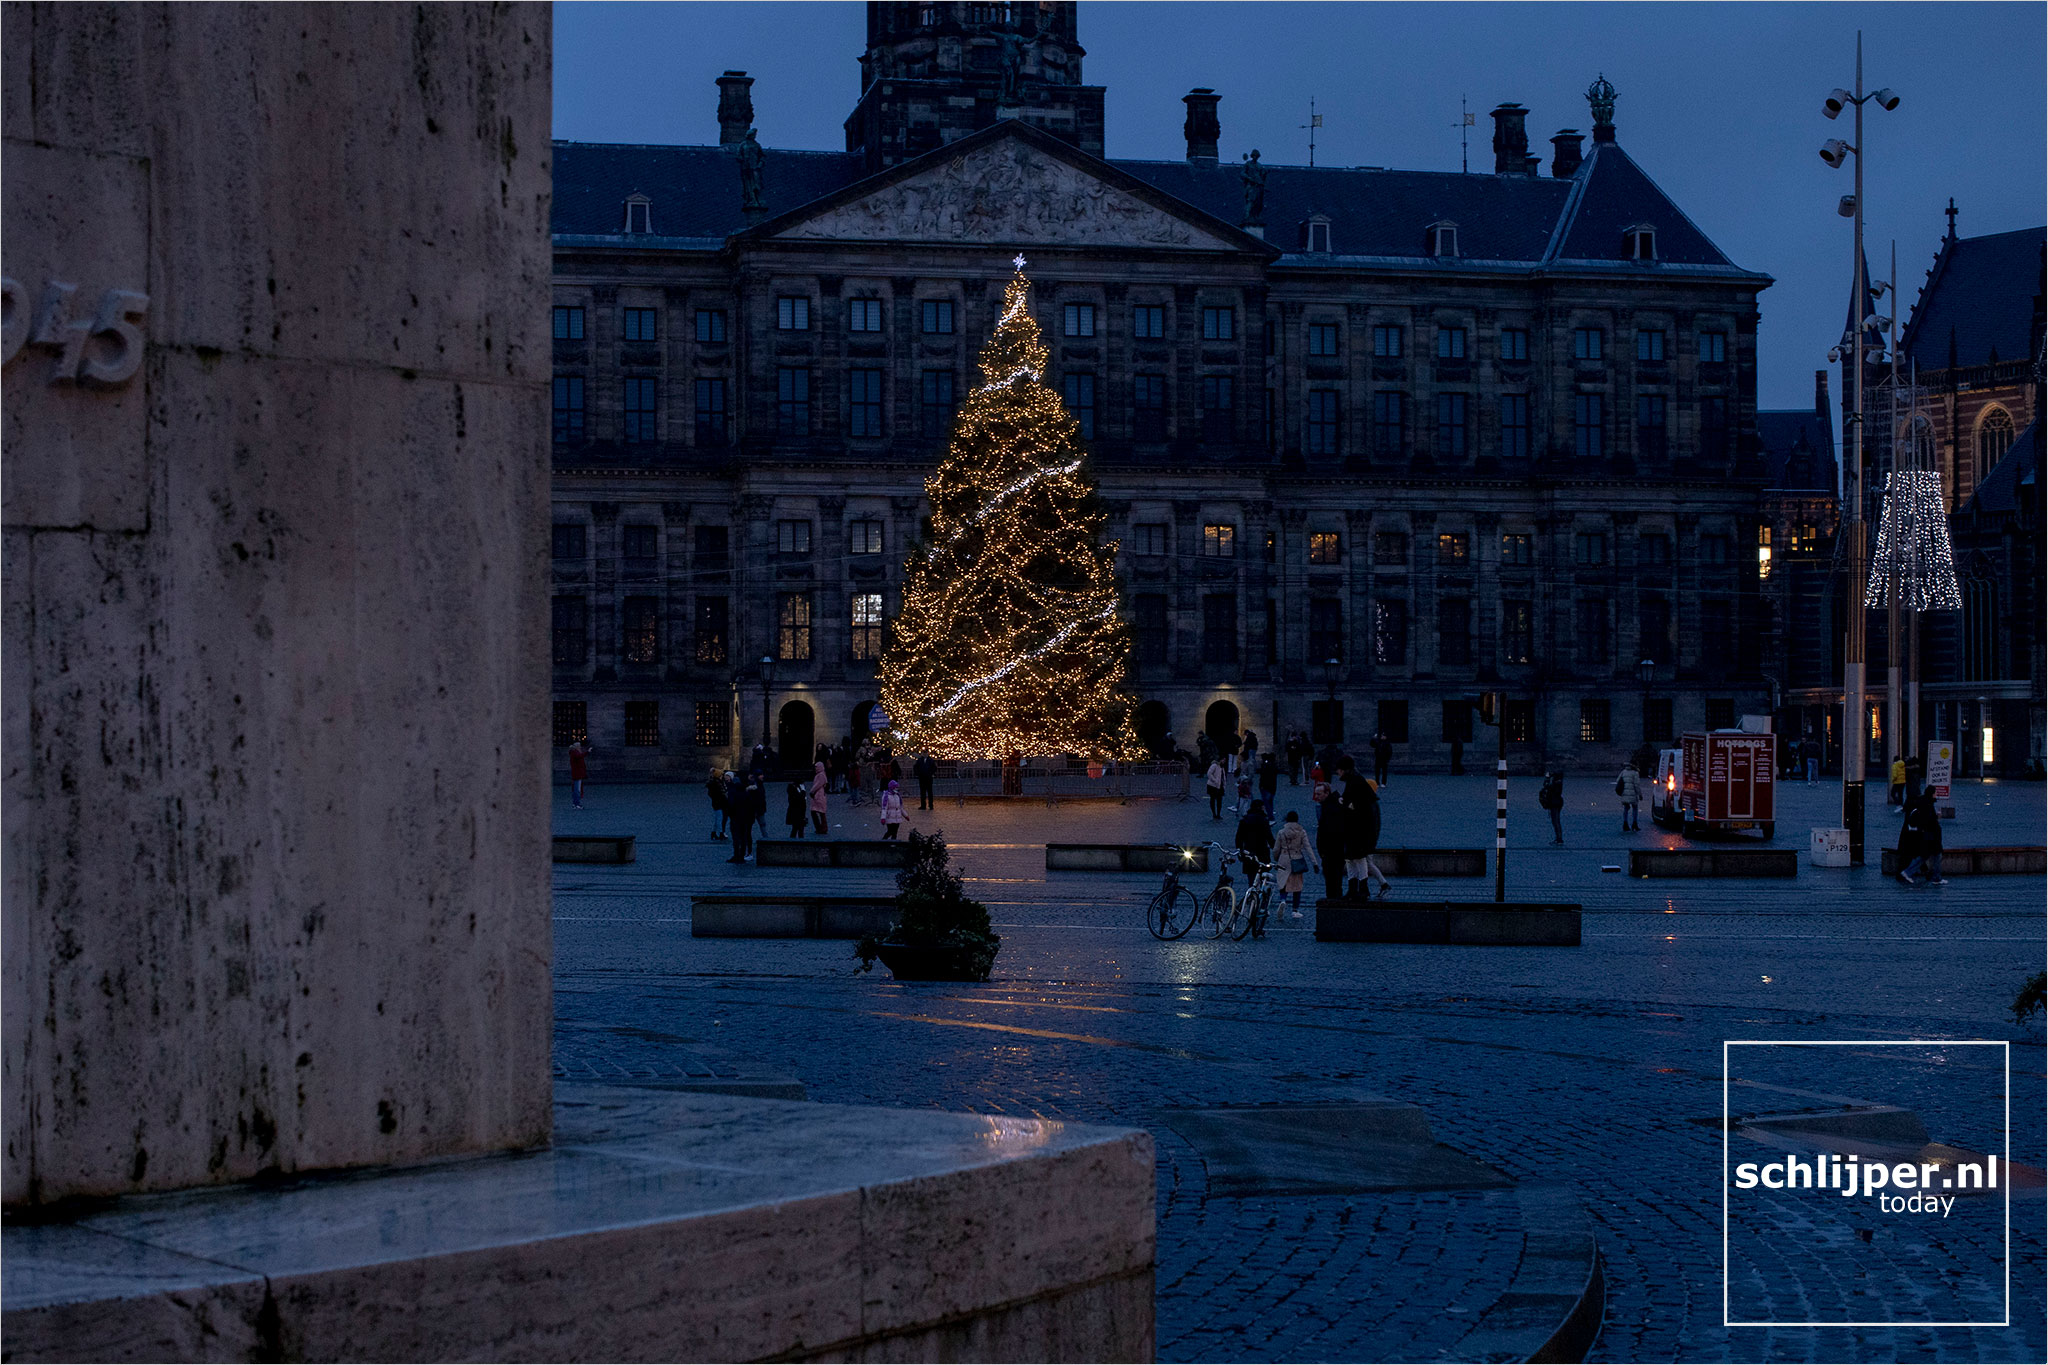 The Netherlands, Amsterdam, 26 december 2020